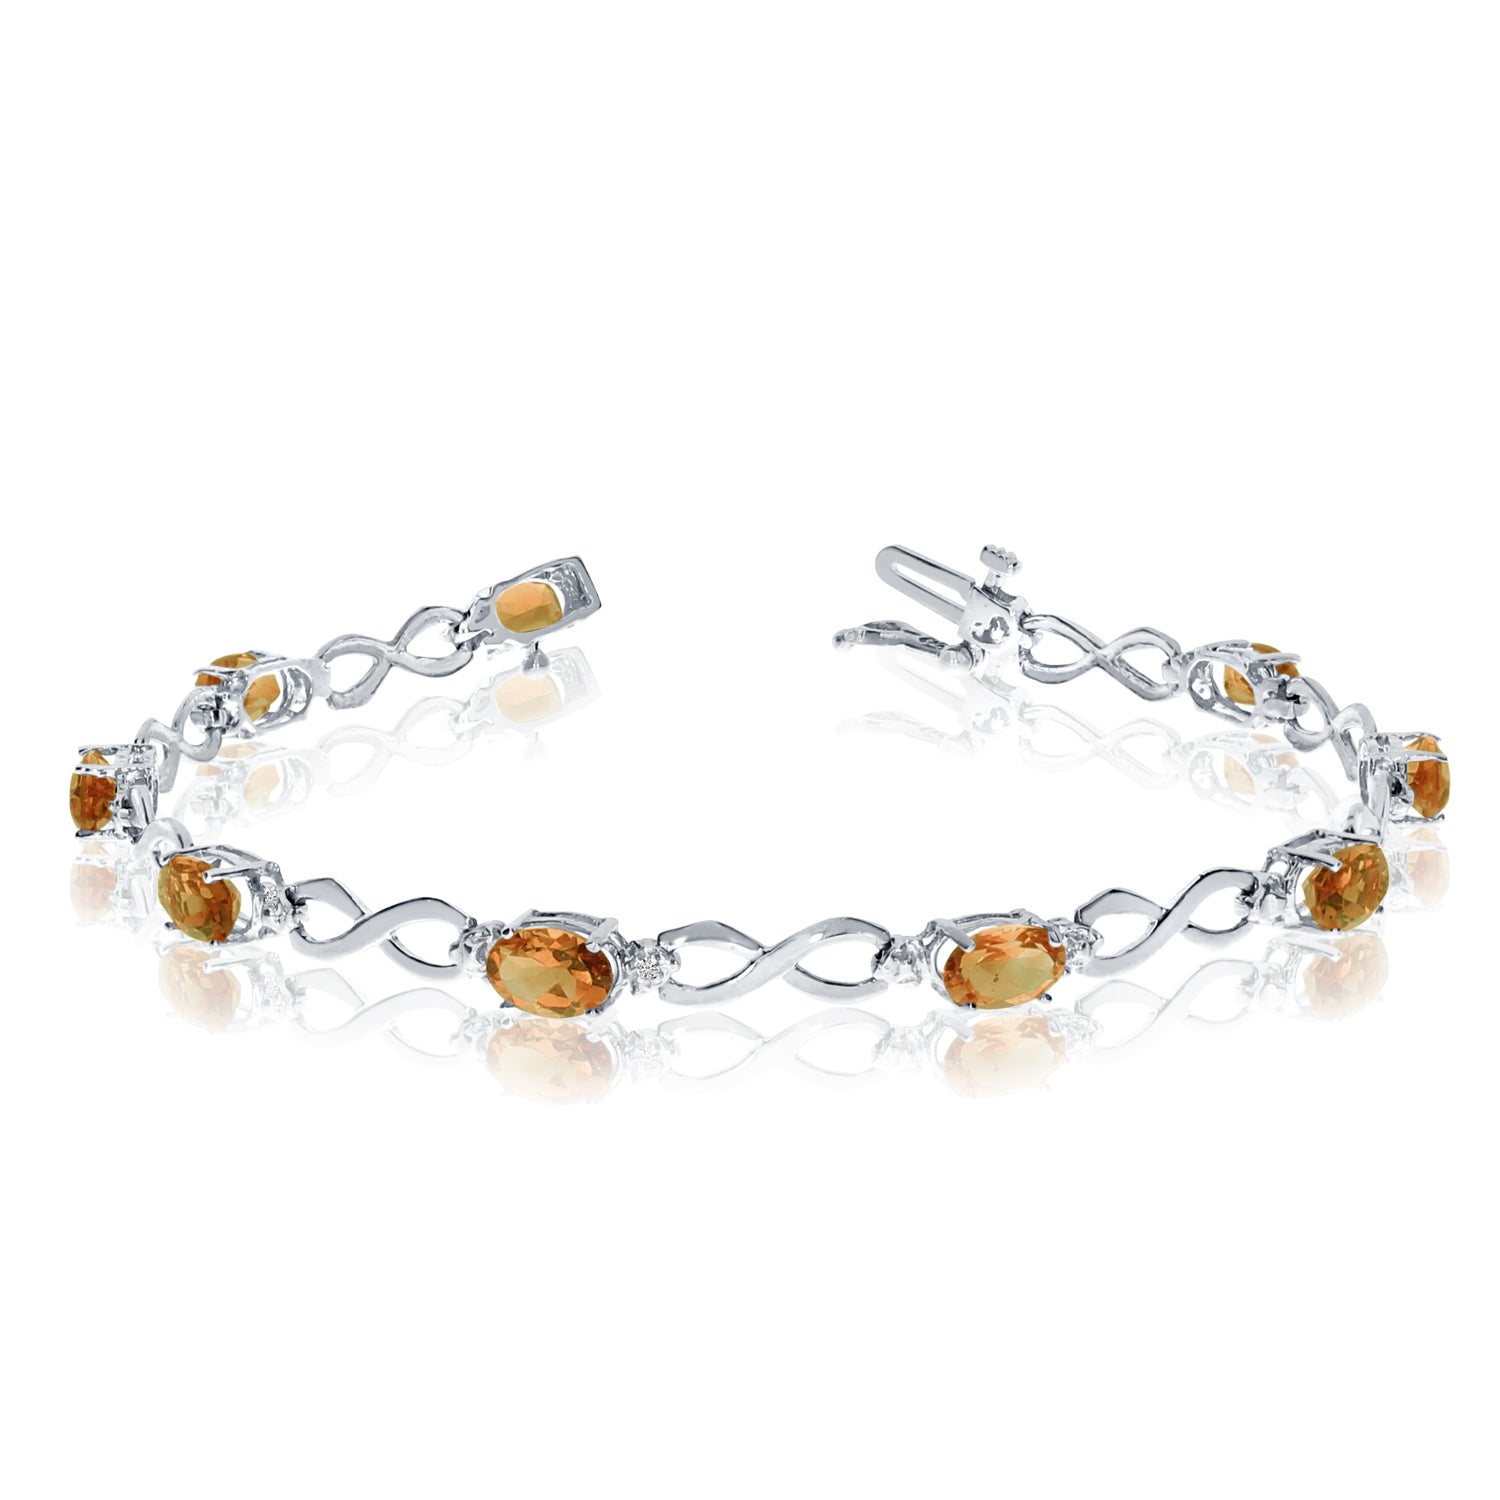 14K White Gold Oval Citrine Stones And Diamonds Infinity Tennis Bracelet, 7" fine designer jewelry for men and women